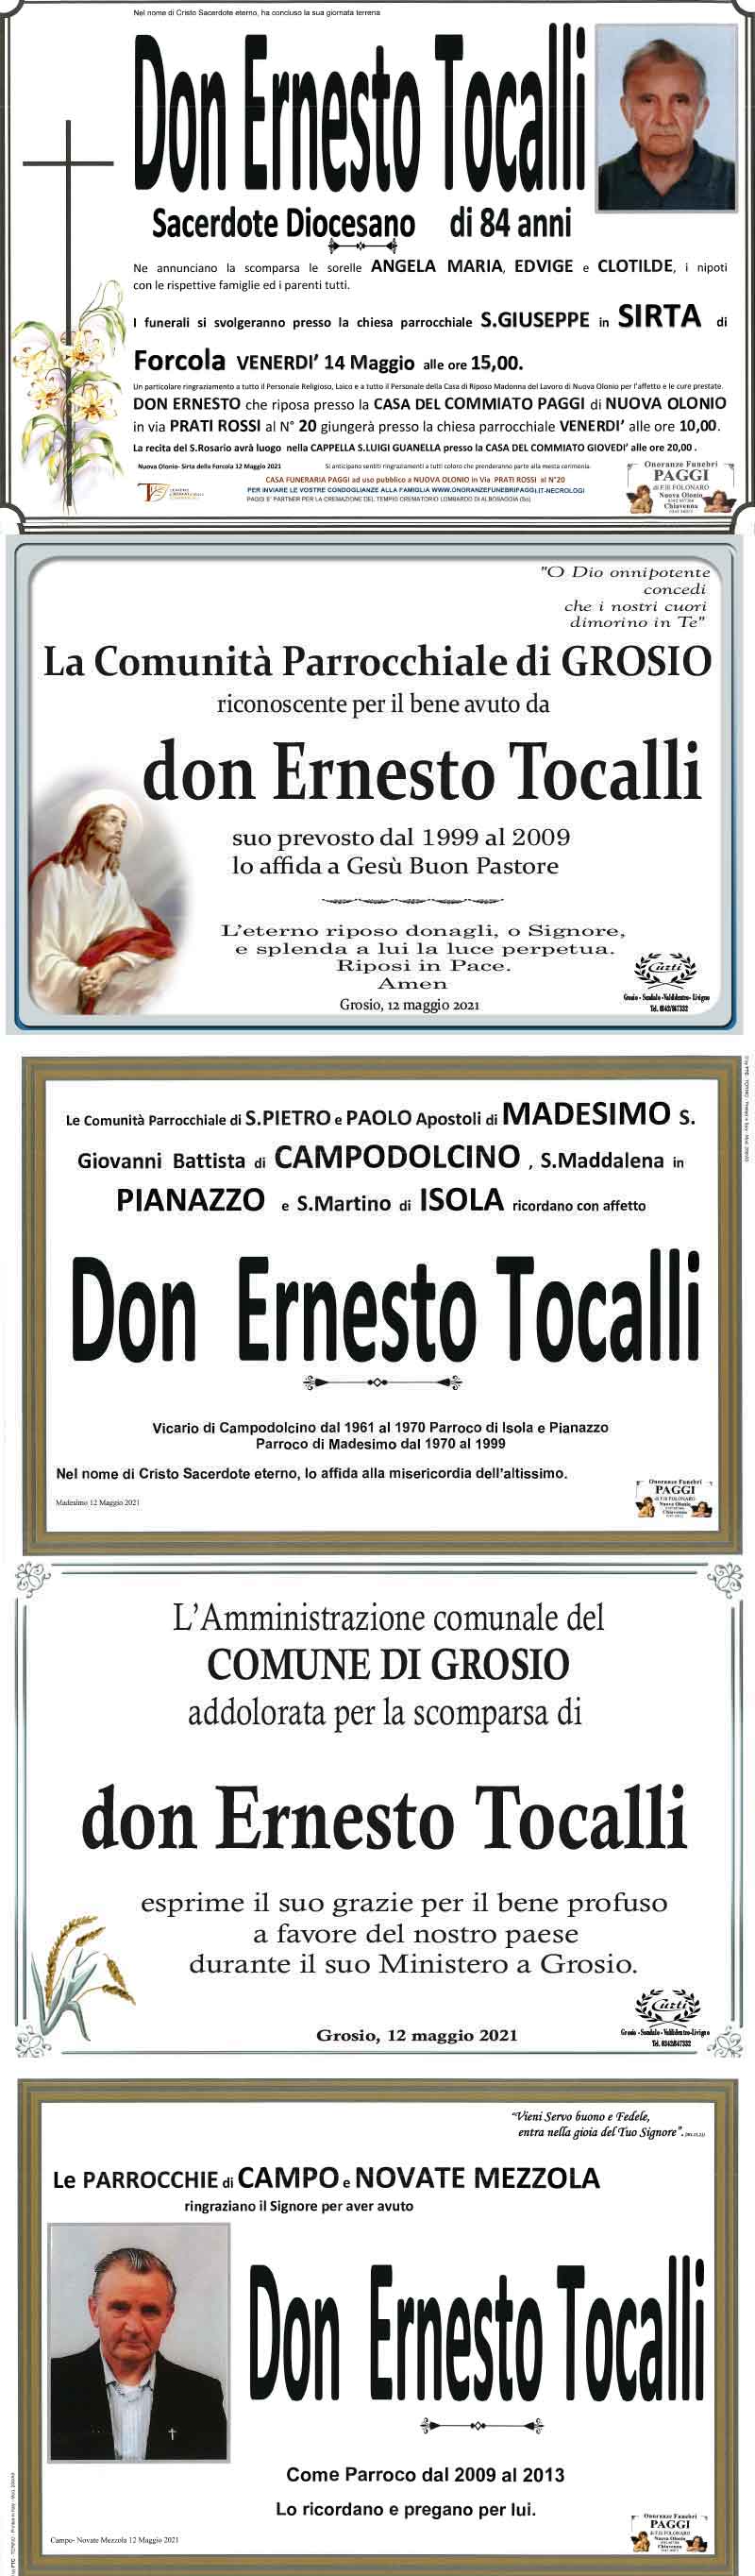 Don Ernesto Tocalli necrologio